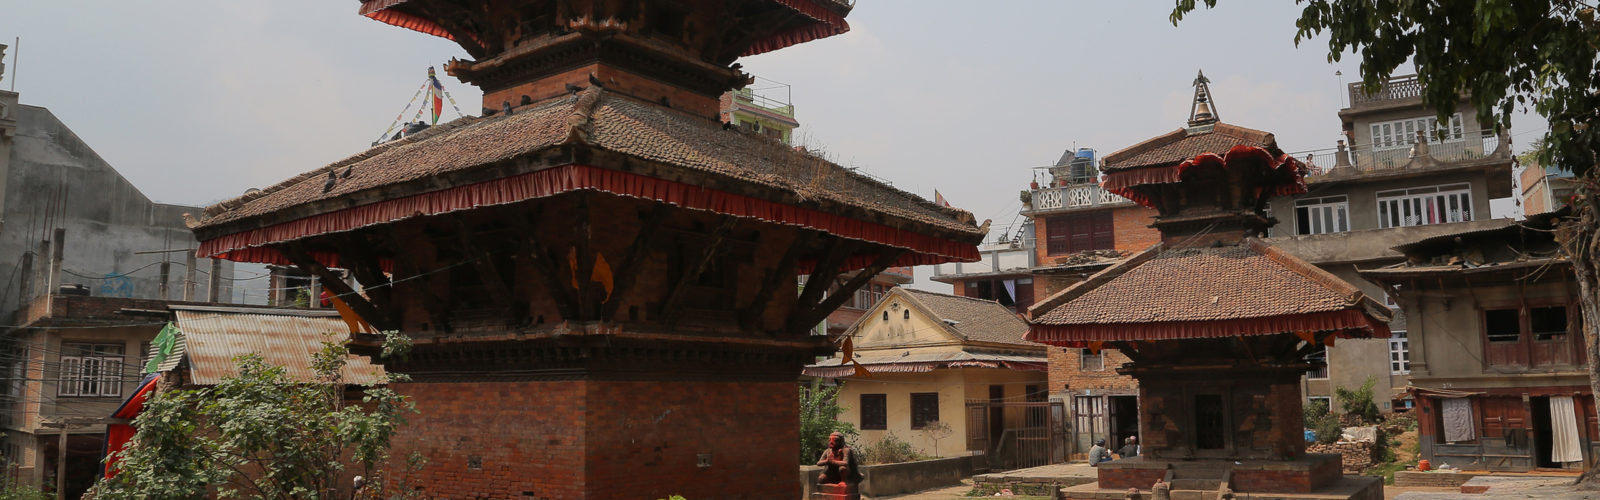 dhulikhel-nepal